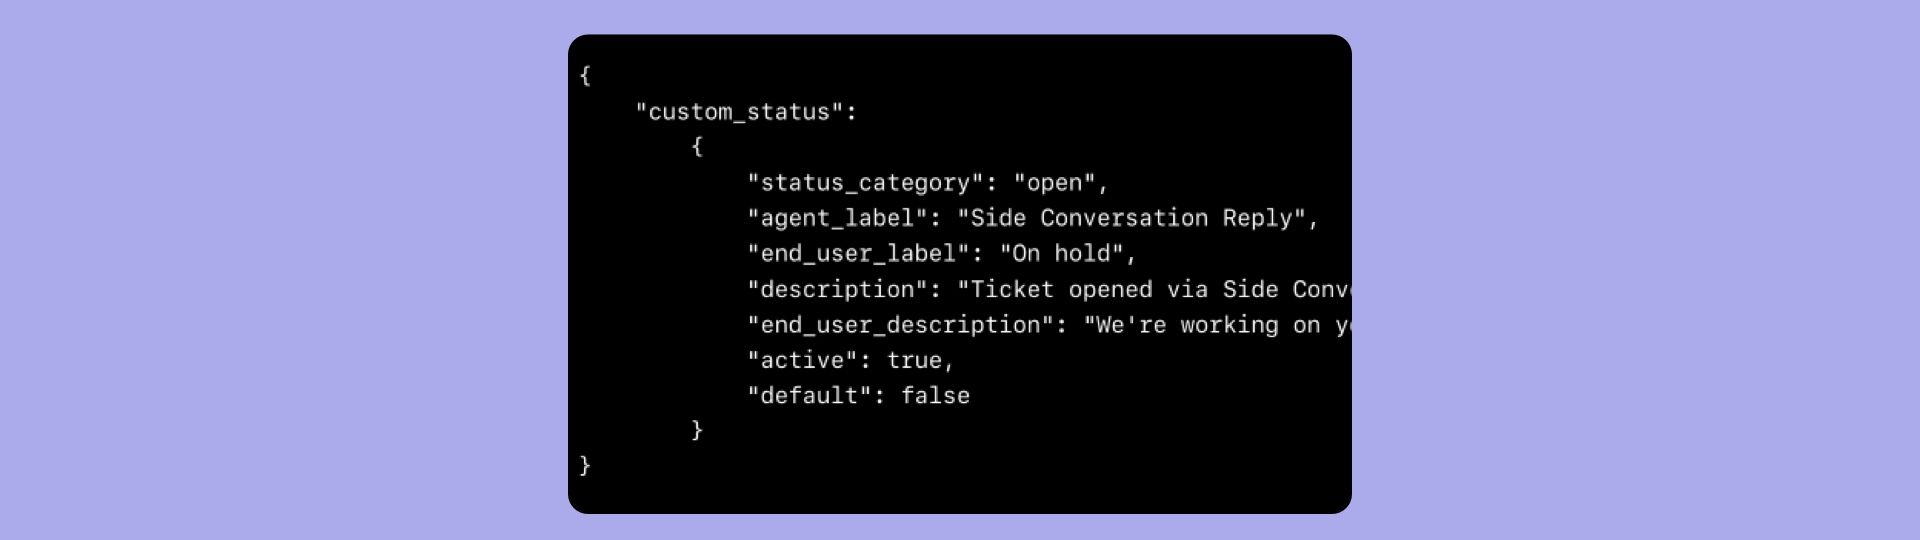 Custom Status API exploring